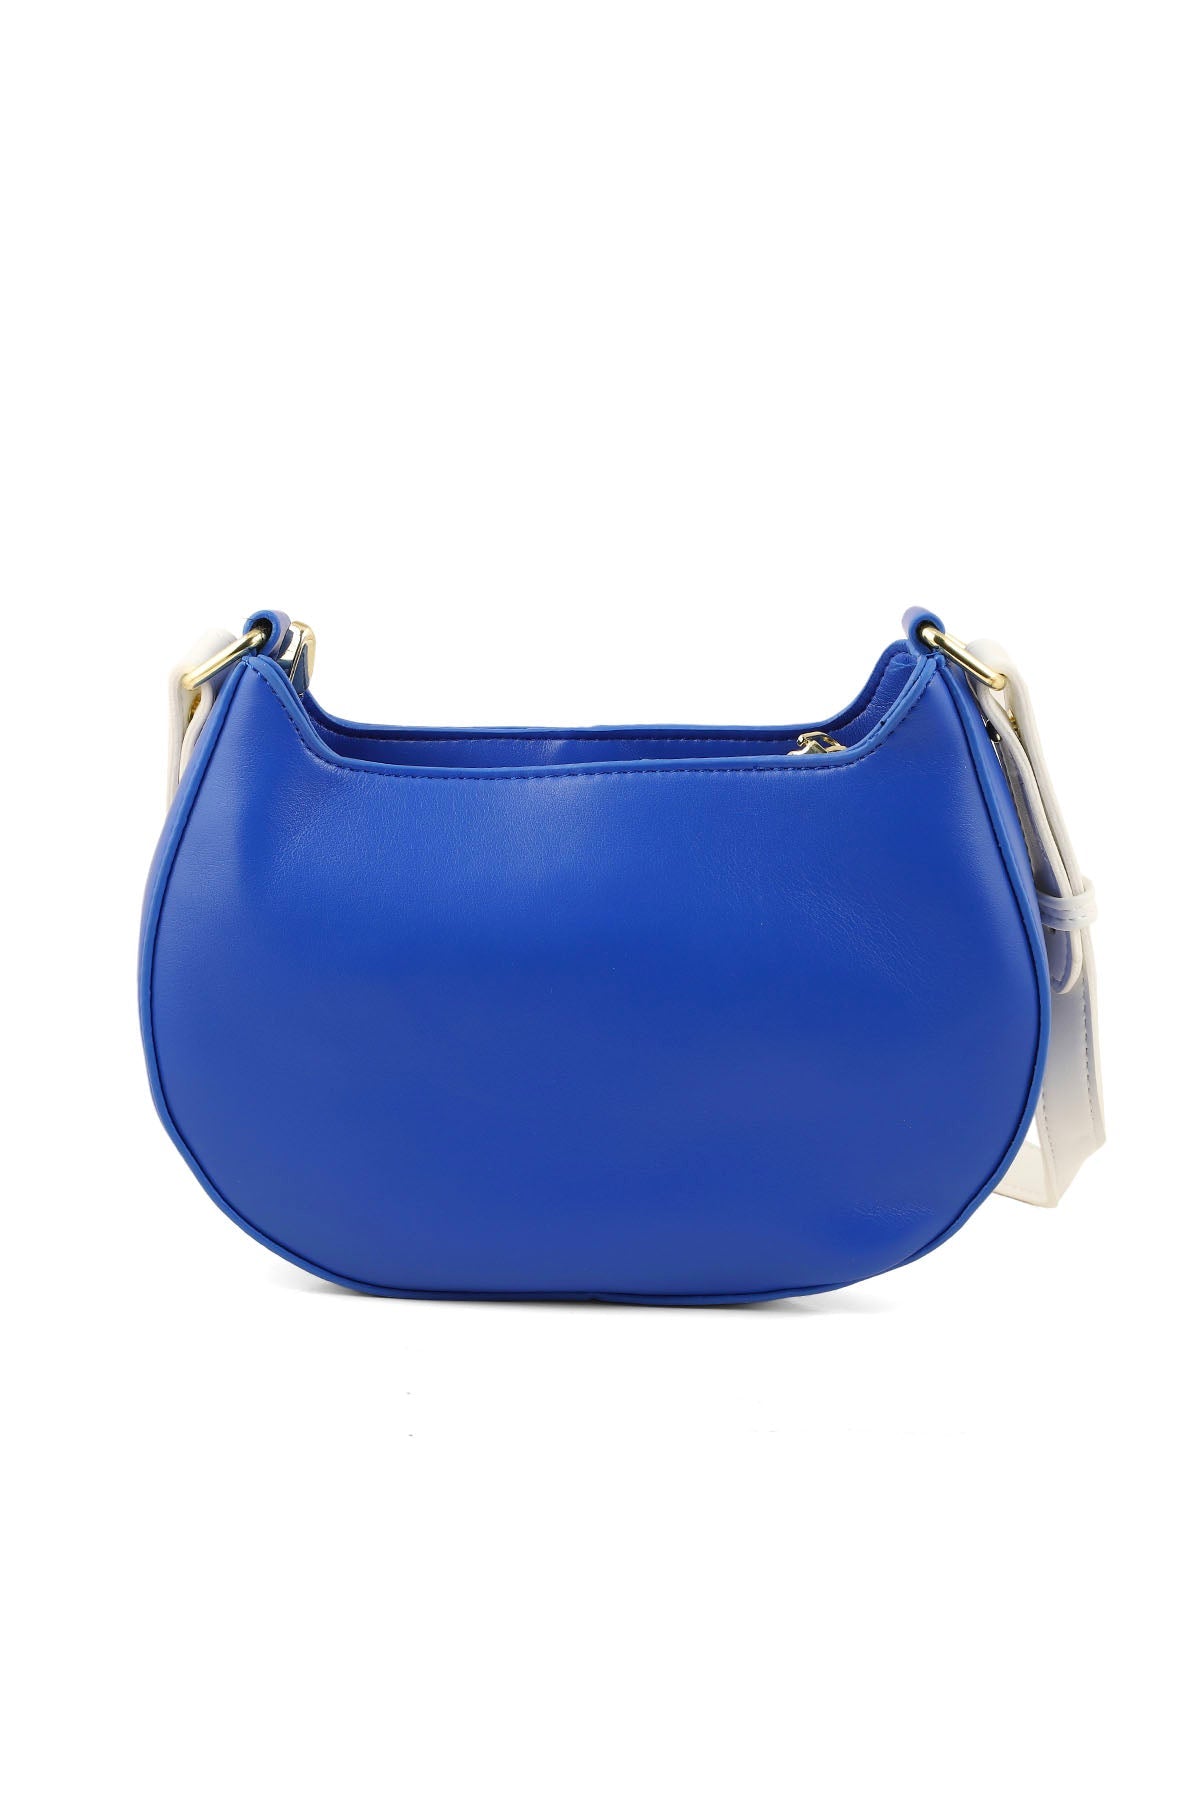 Hobo Hand Bags B14953-Blue